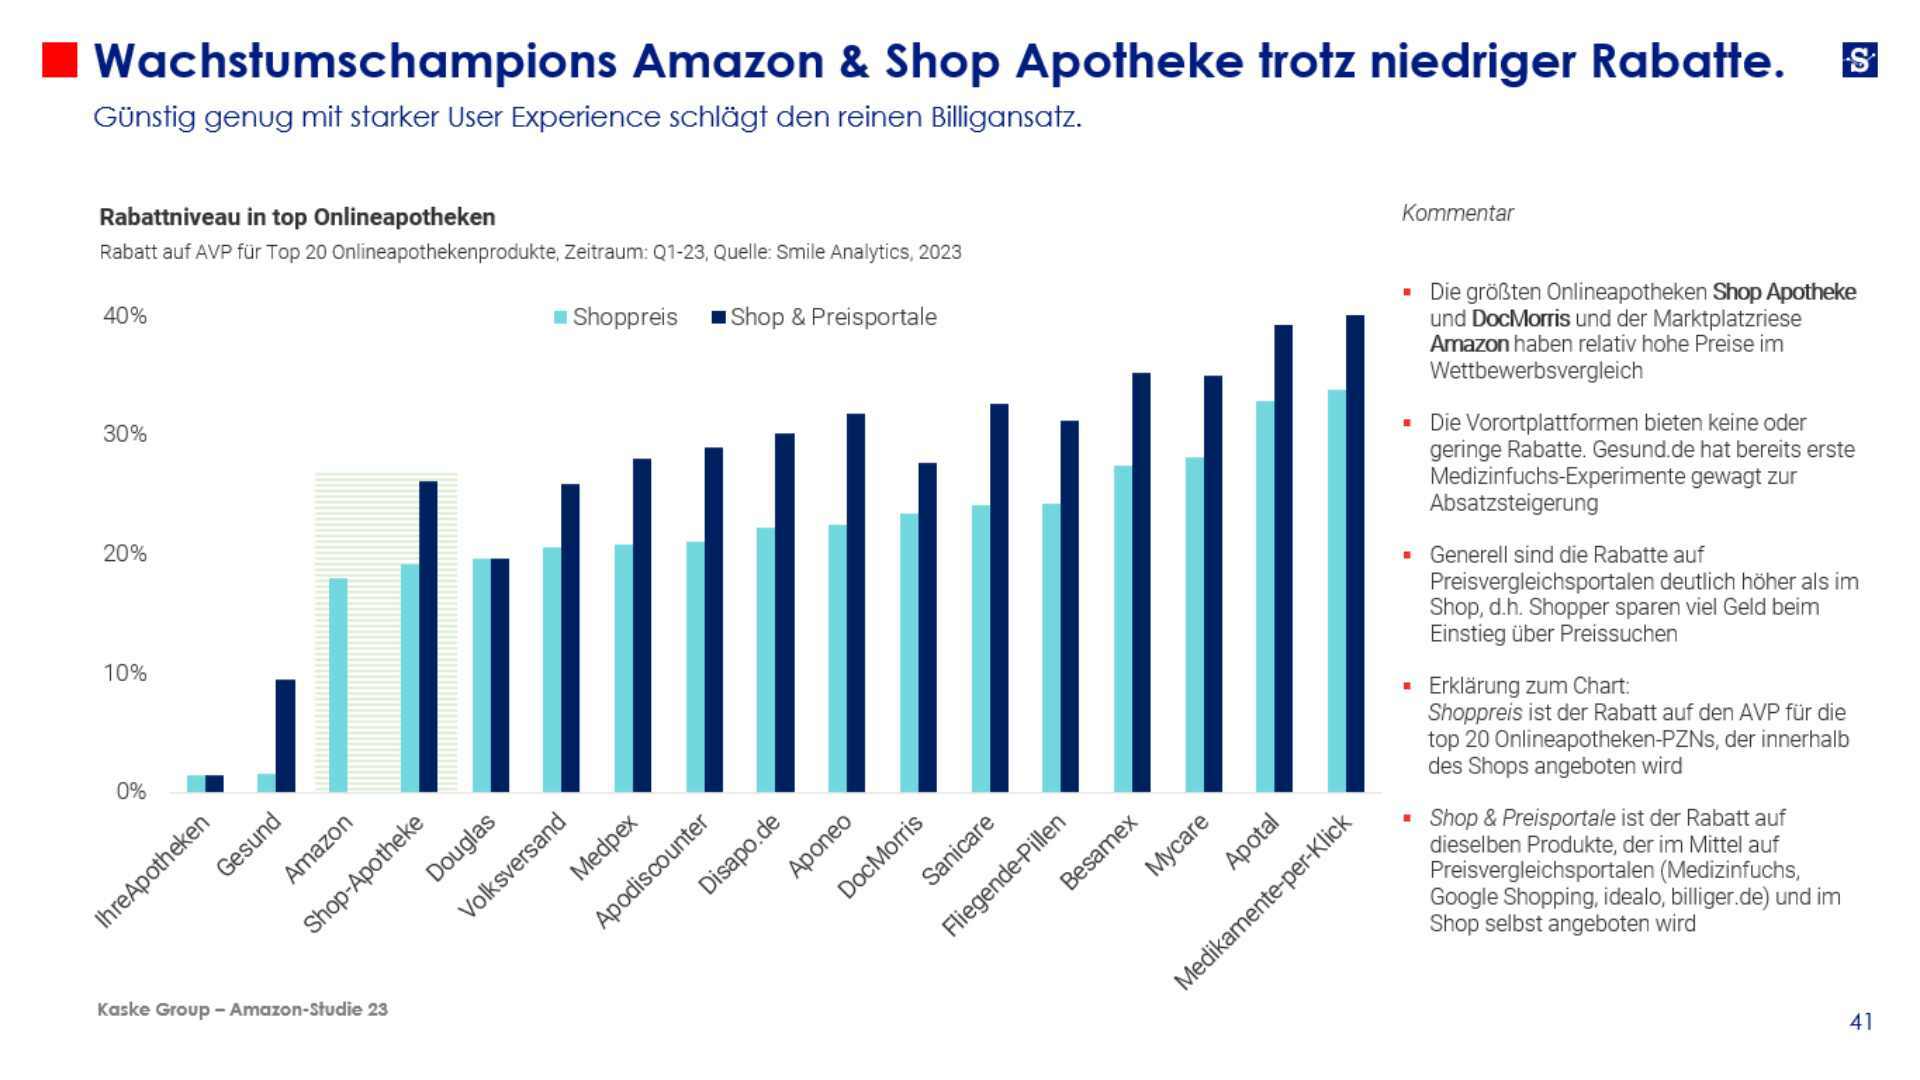 Wachstumschampions Amazon & Shop Apotheke trotz niedriger Rabatte